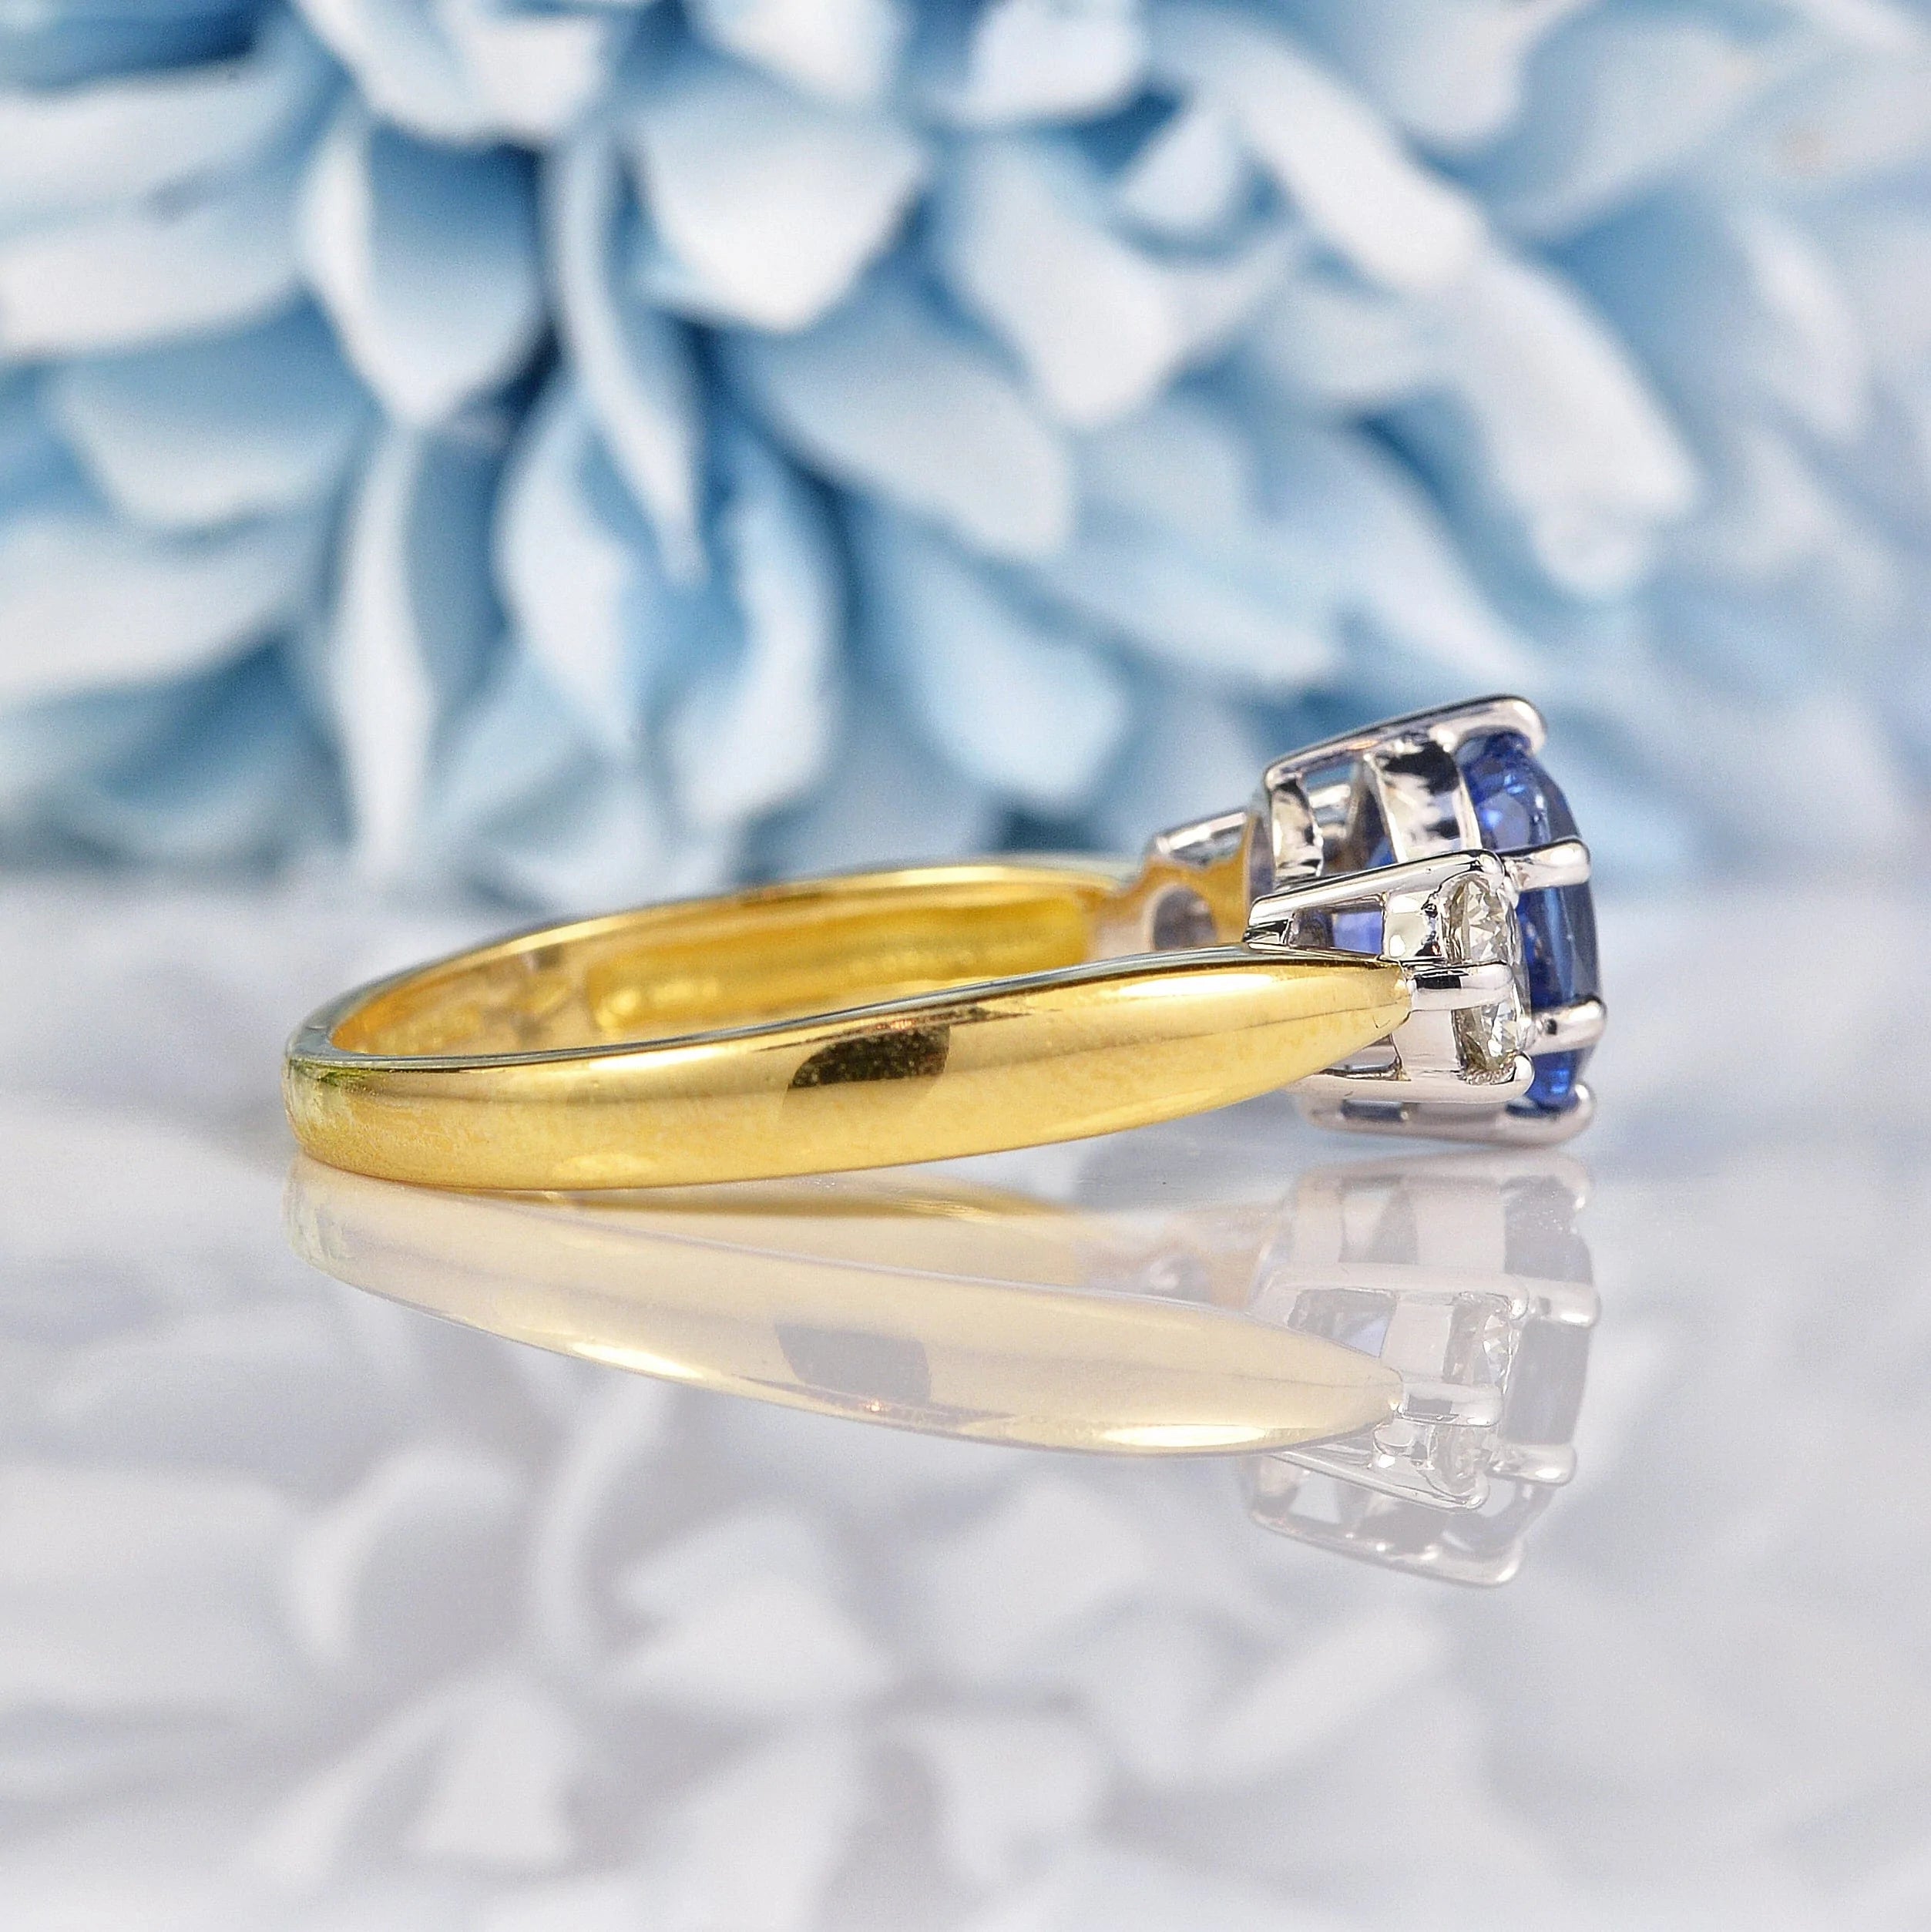 Ellibelle Jewellery Natural Ceylon Sapphire & Diamond Three Stone Engagement Ring (1.60ct)